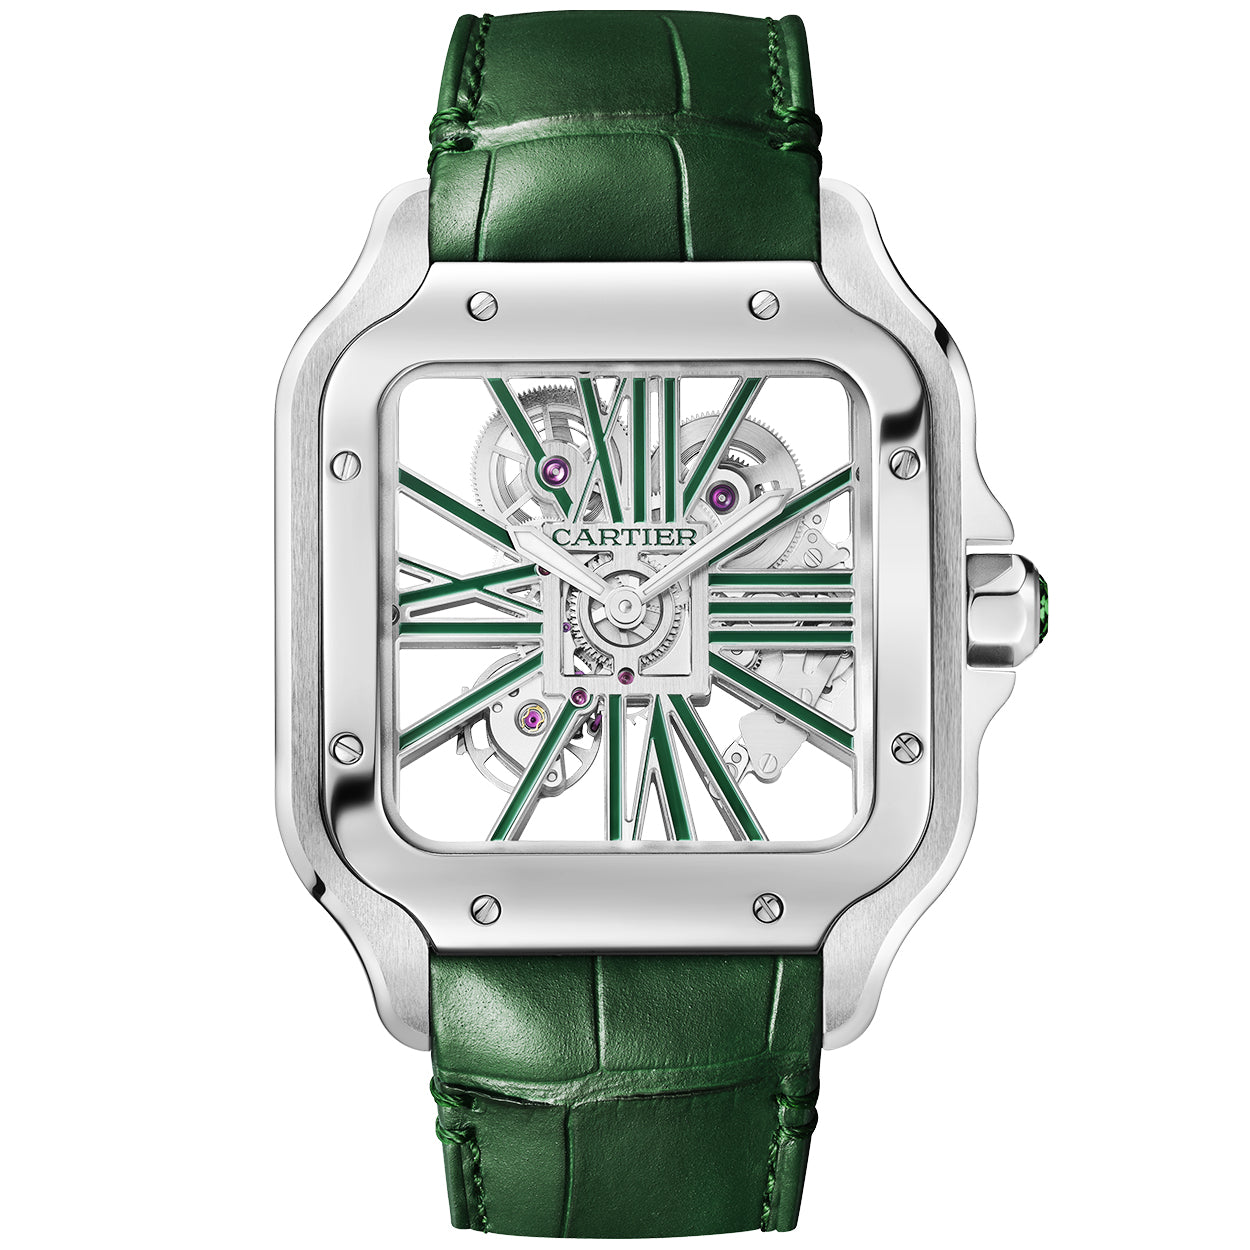 Santos de Cartier Large Skeleton/Green Dial Men's Watch